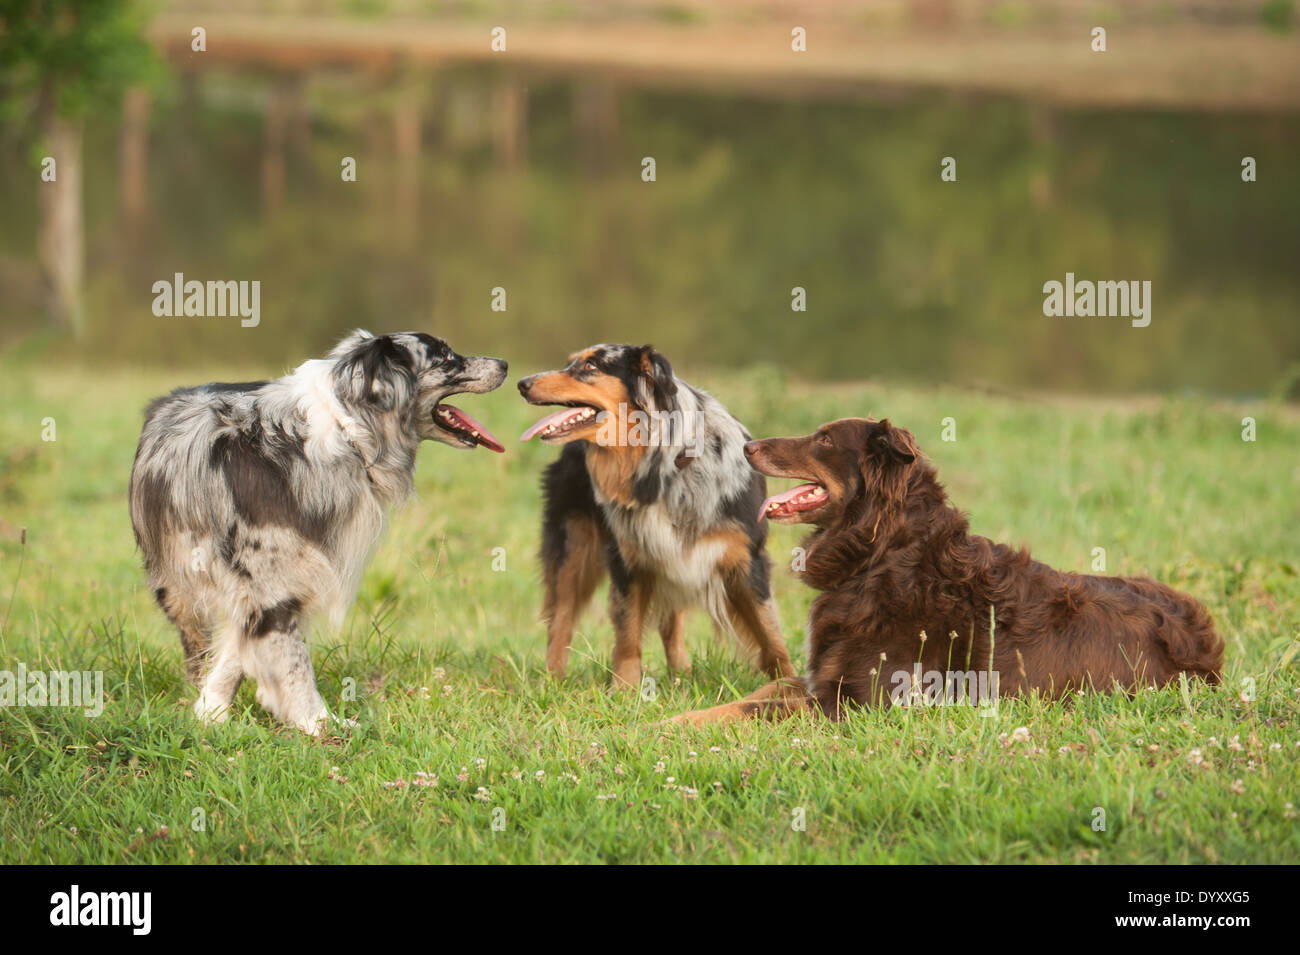 Three Australian Shepherd dogs in grass by pond Stock Photo